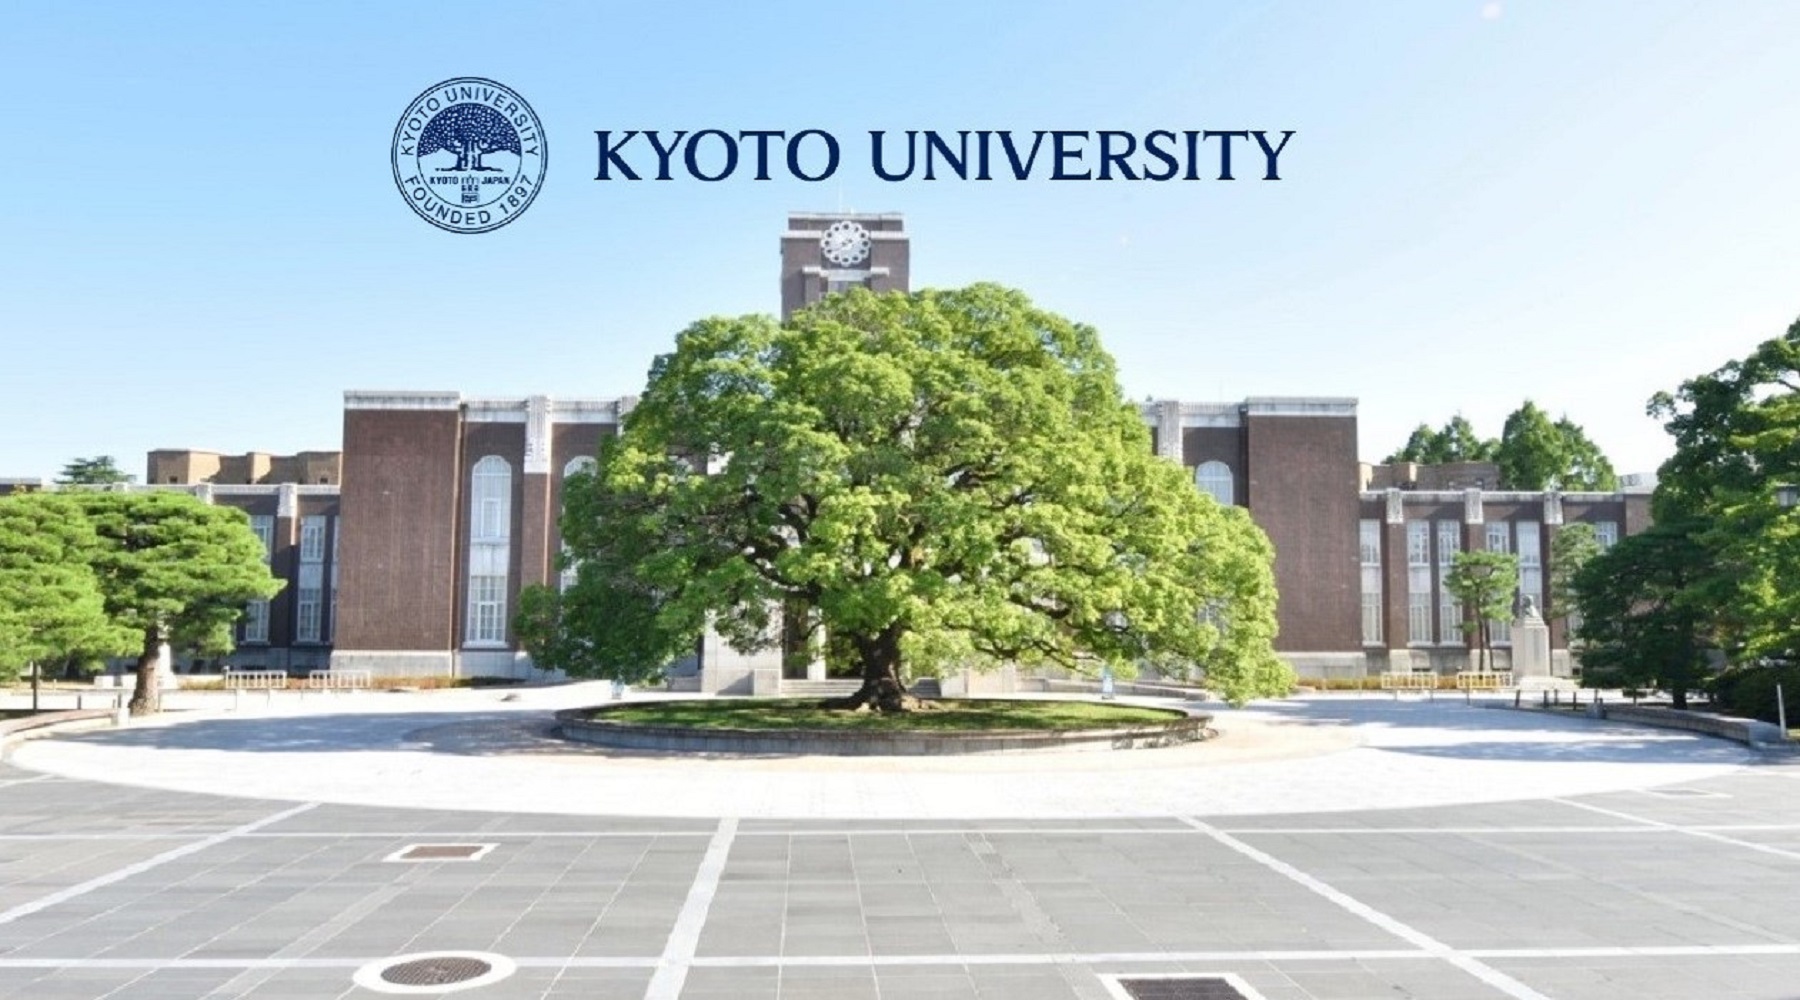 can you visit kyoto university